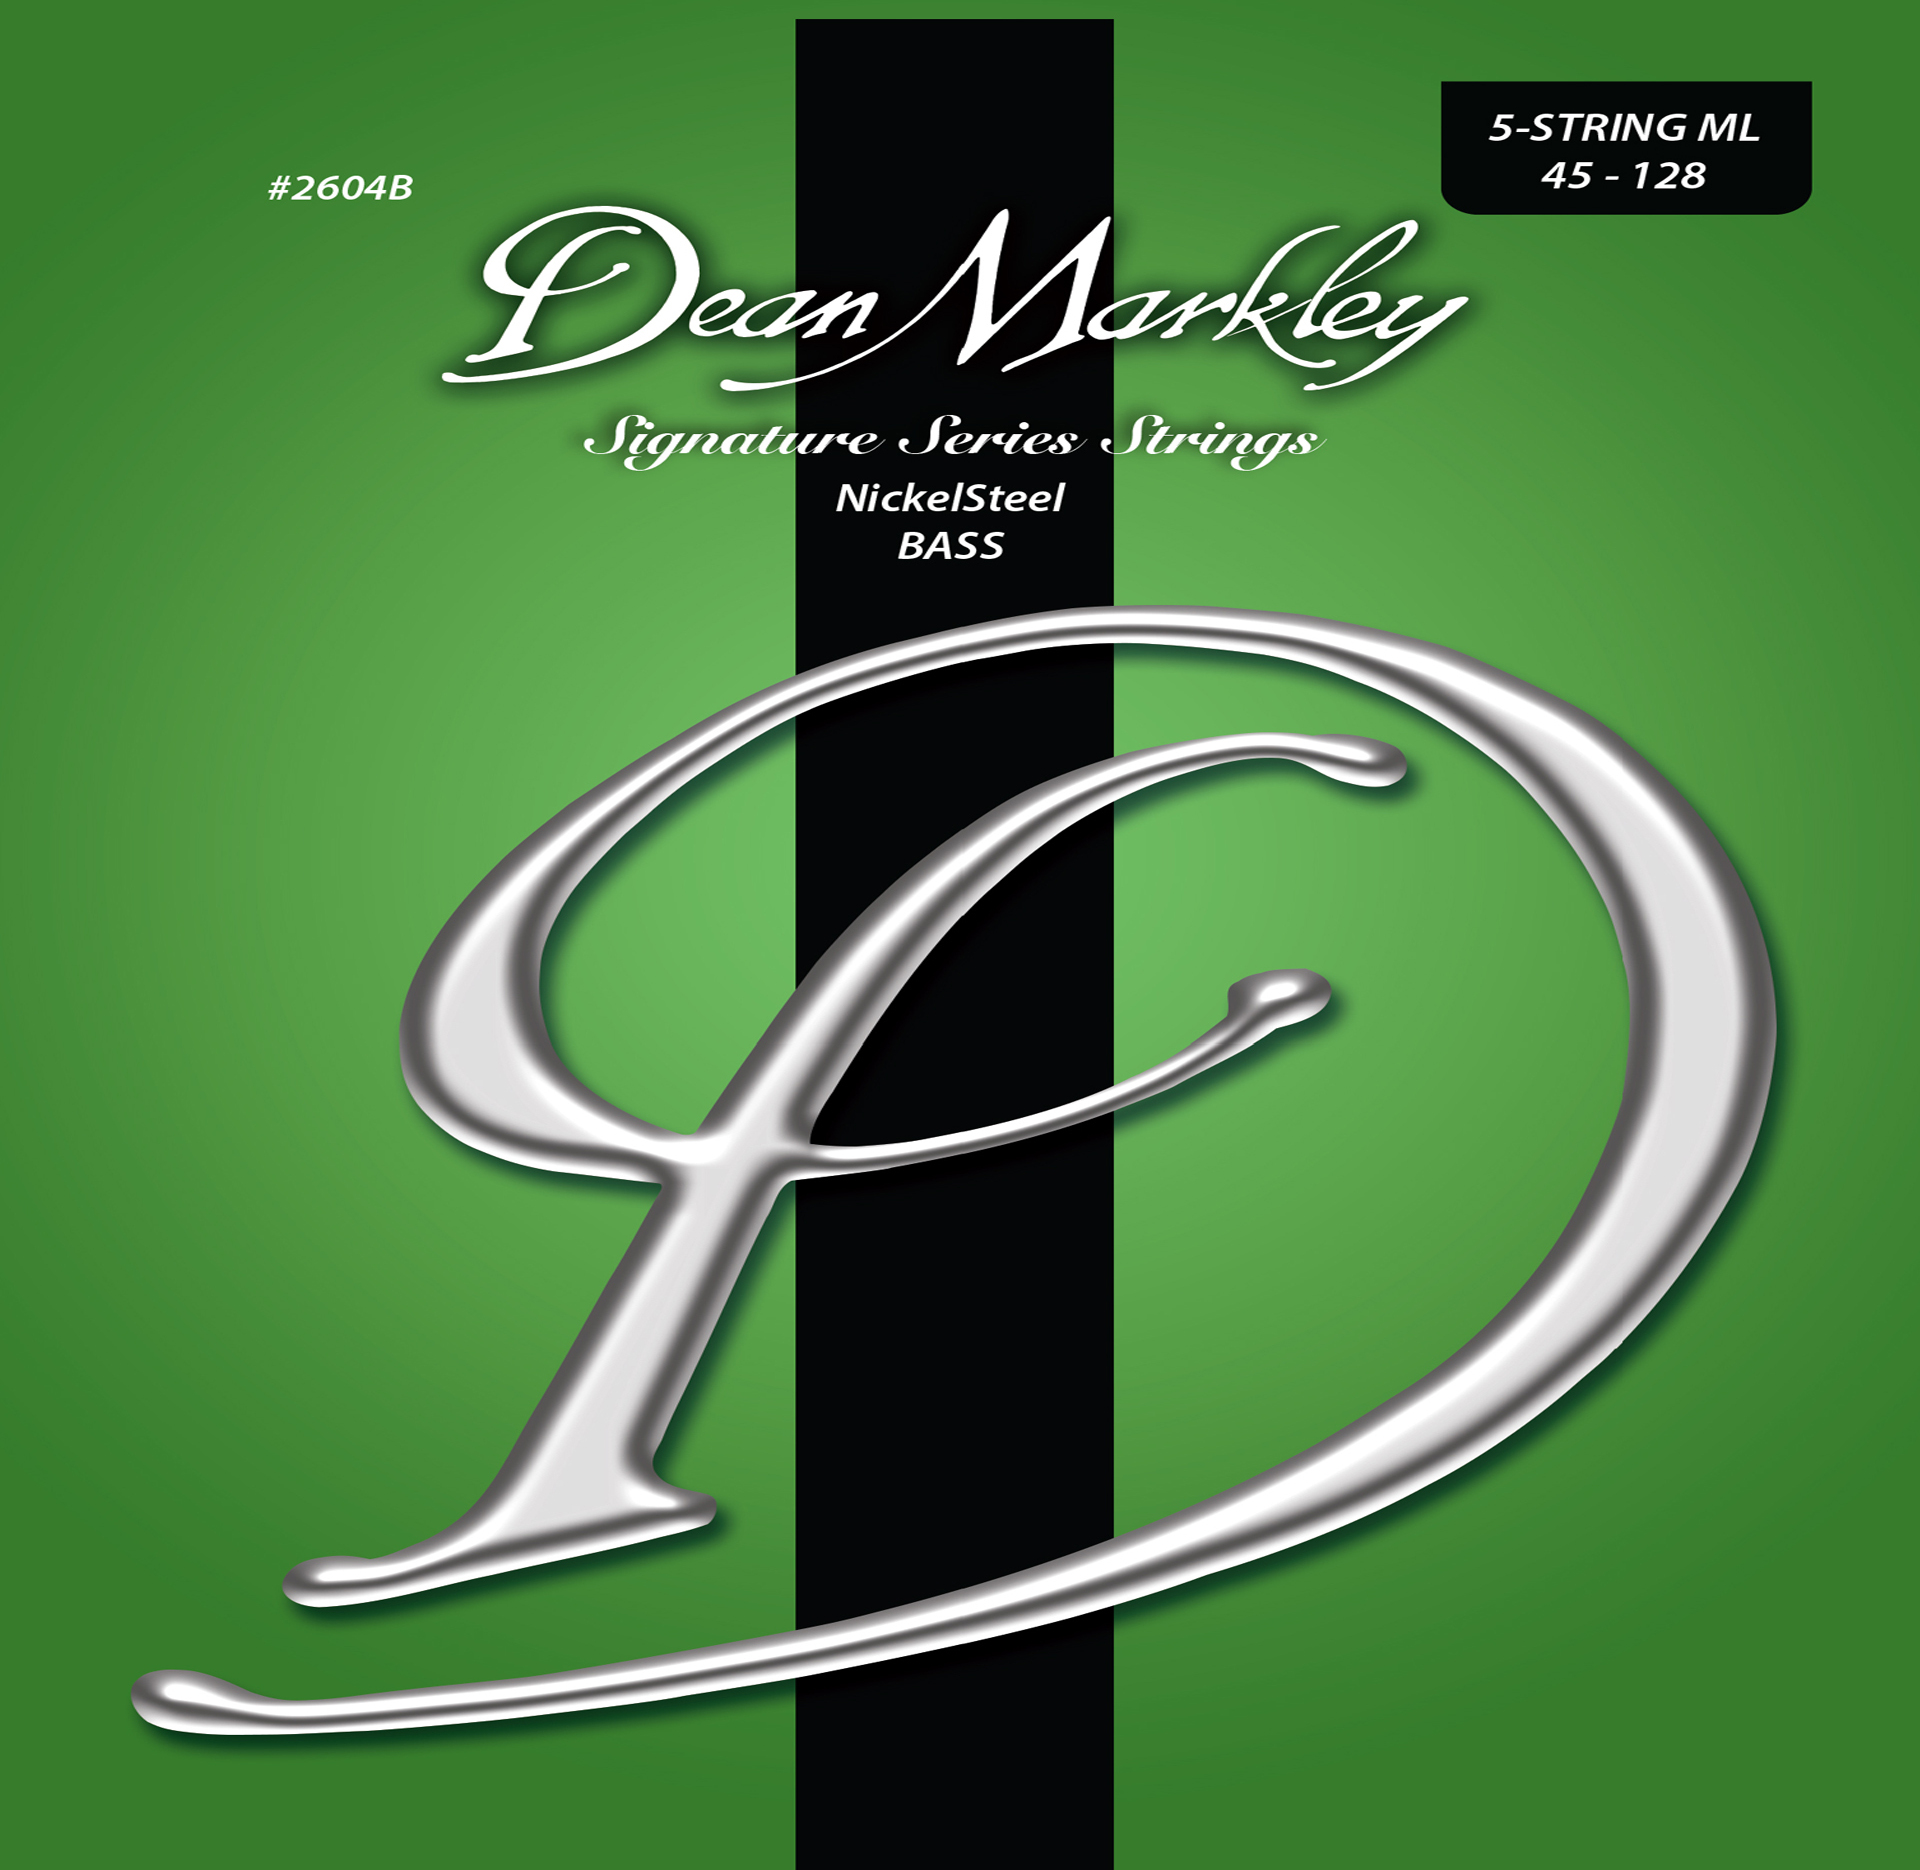 Dean Markley Signature - 2604 B - Electric Bass String Set, 5-String, Medium Light, .045-.128